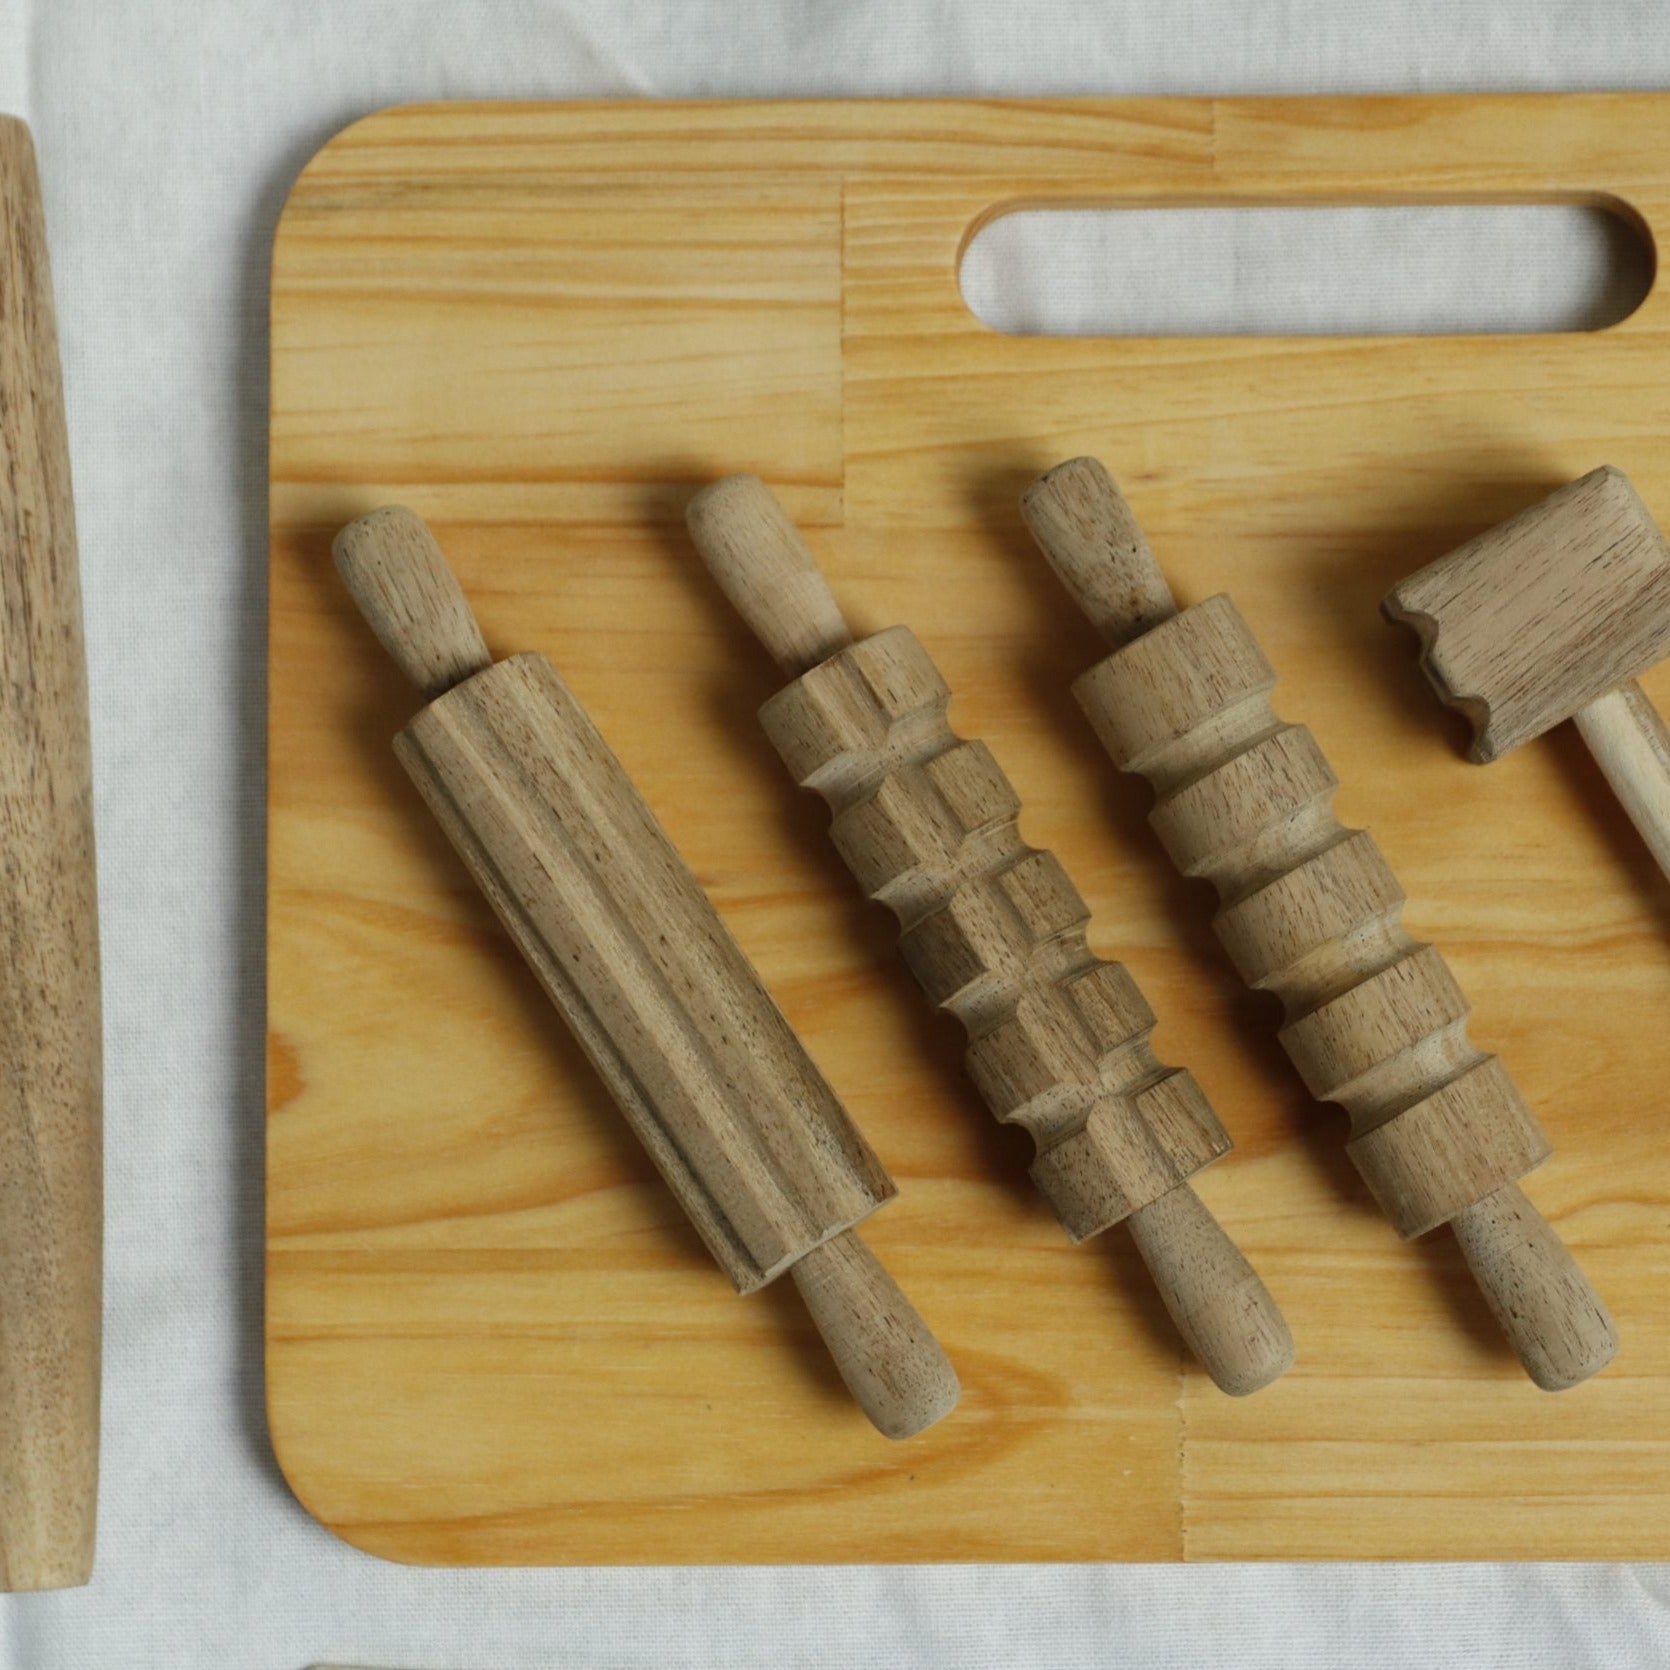 Wooden Play Dough Kit